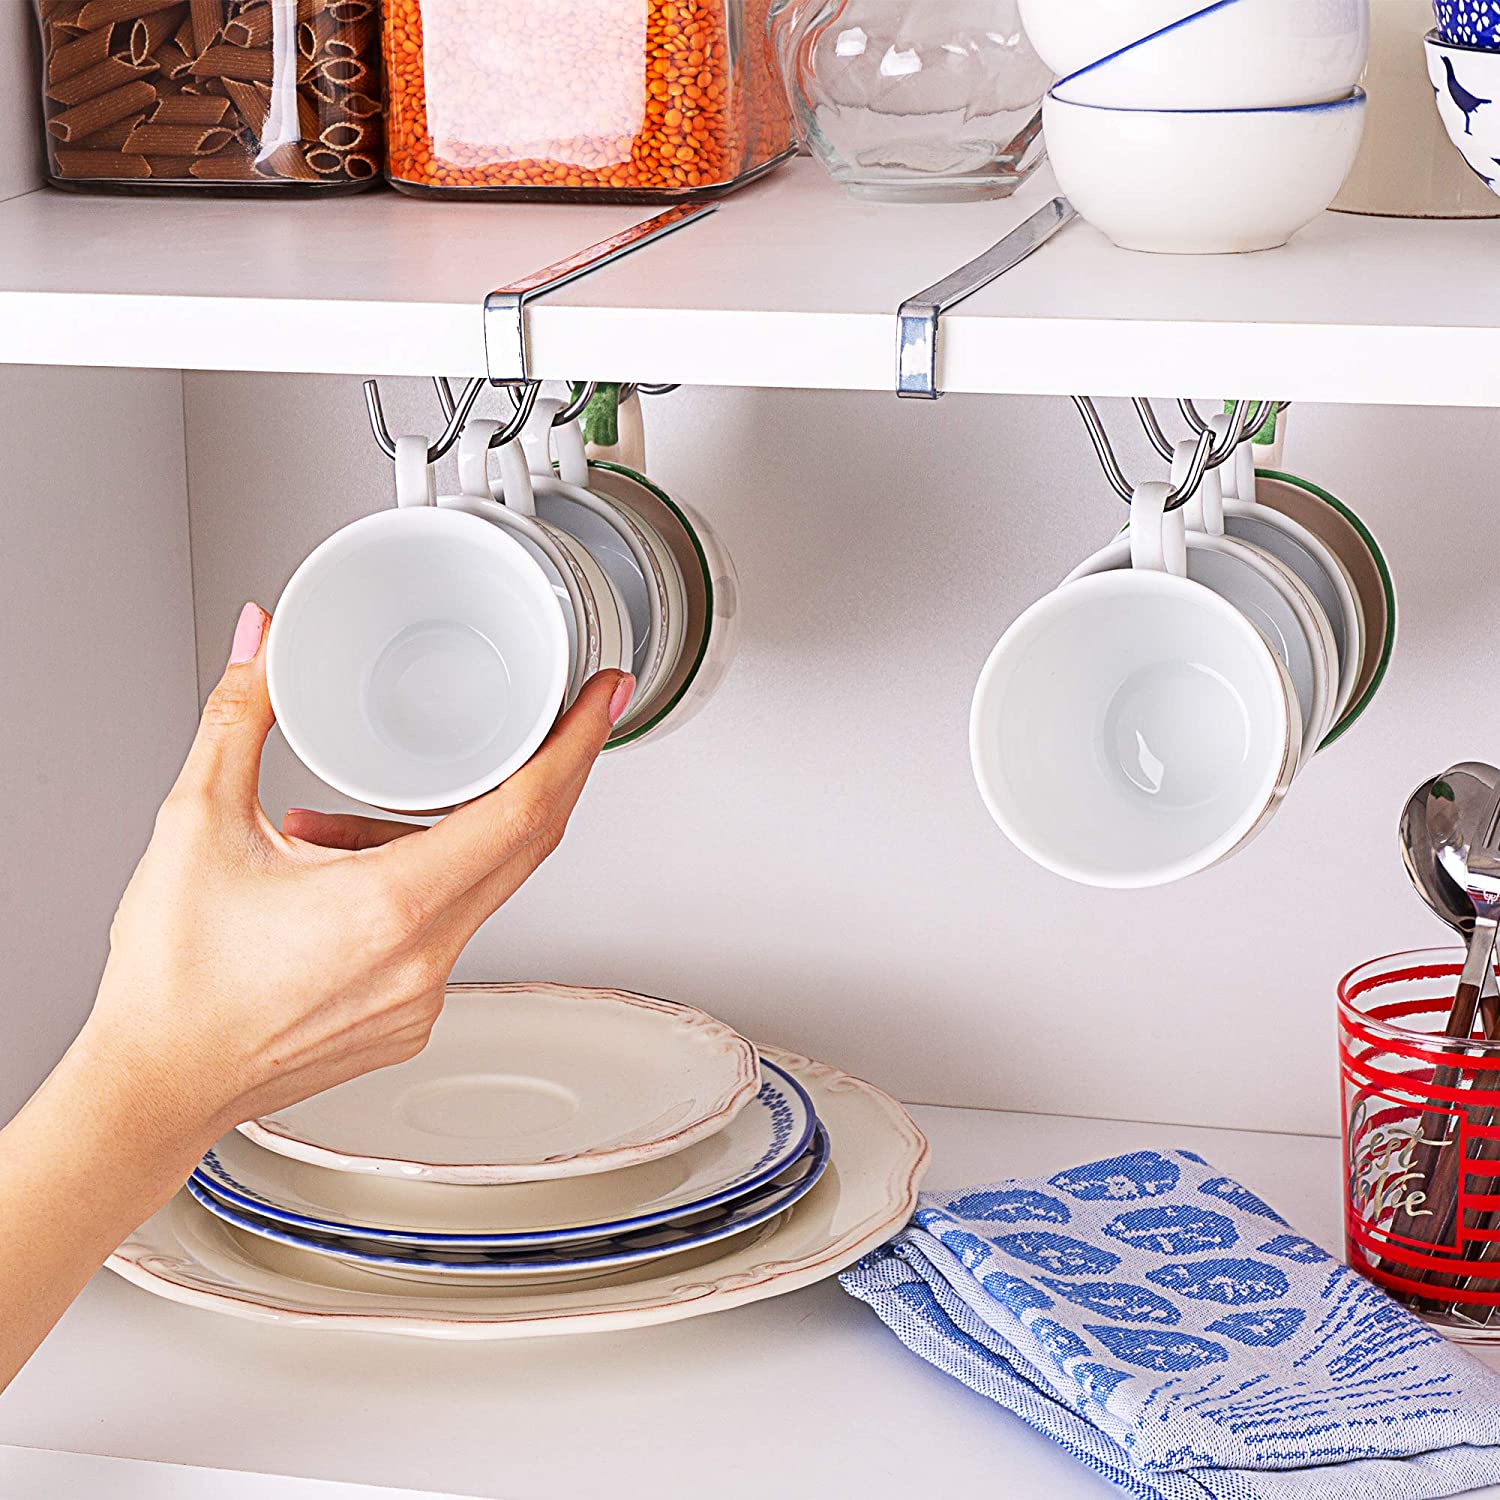  EDNA HOME Mug Cups Storage Rack, Drilling-Free Under Cabinet Closet Holder Hooks for Hanging Mugs, Ties, Belts, Scarf, Kitchen Utensils, Necklace and More,...